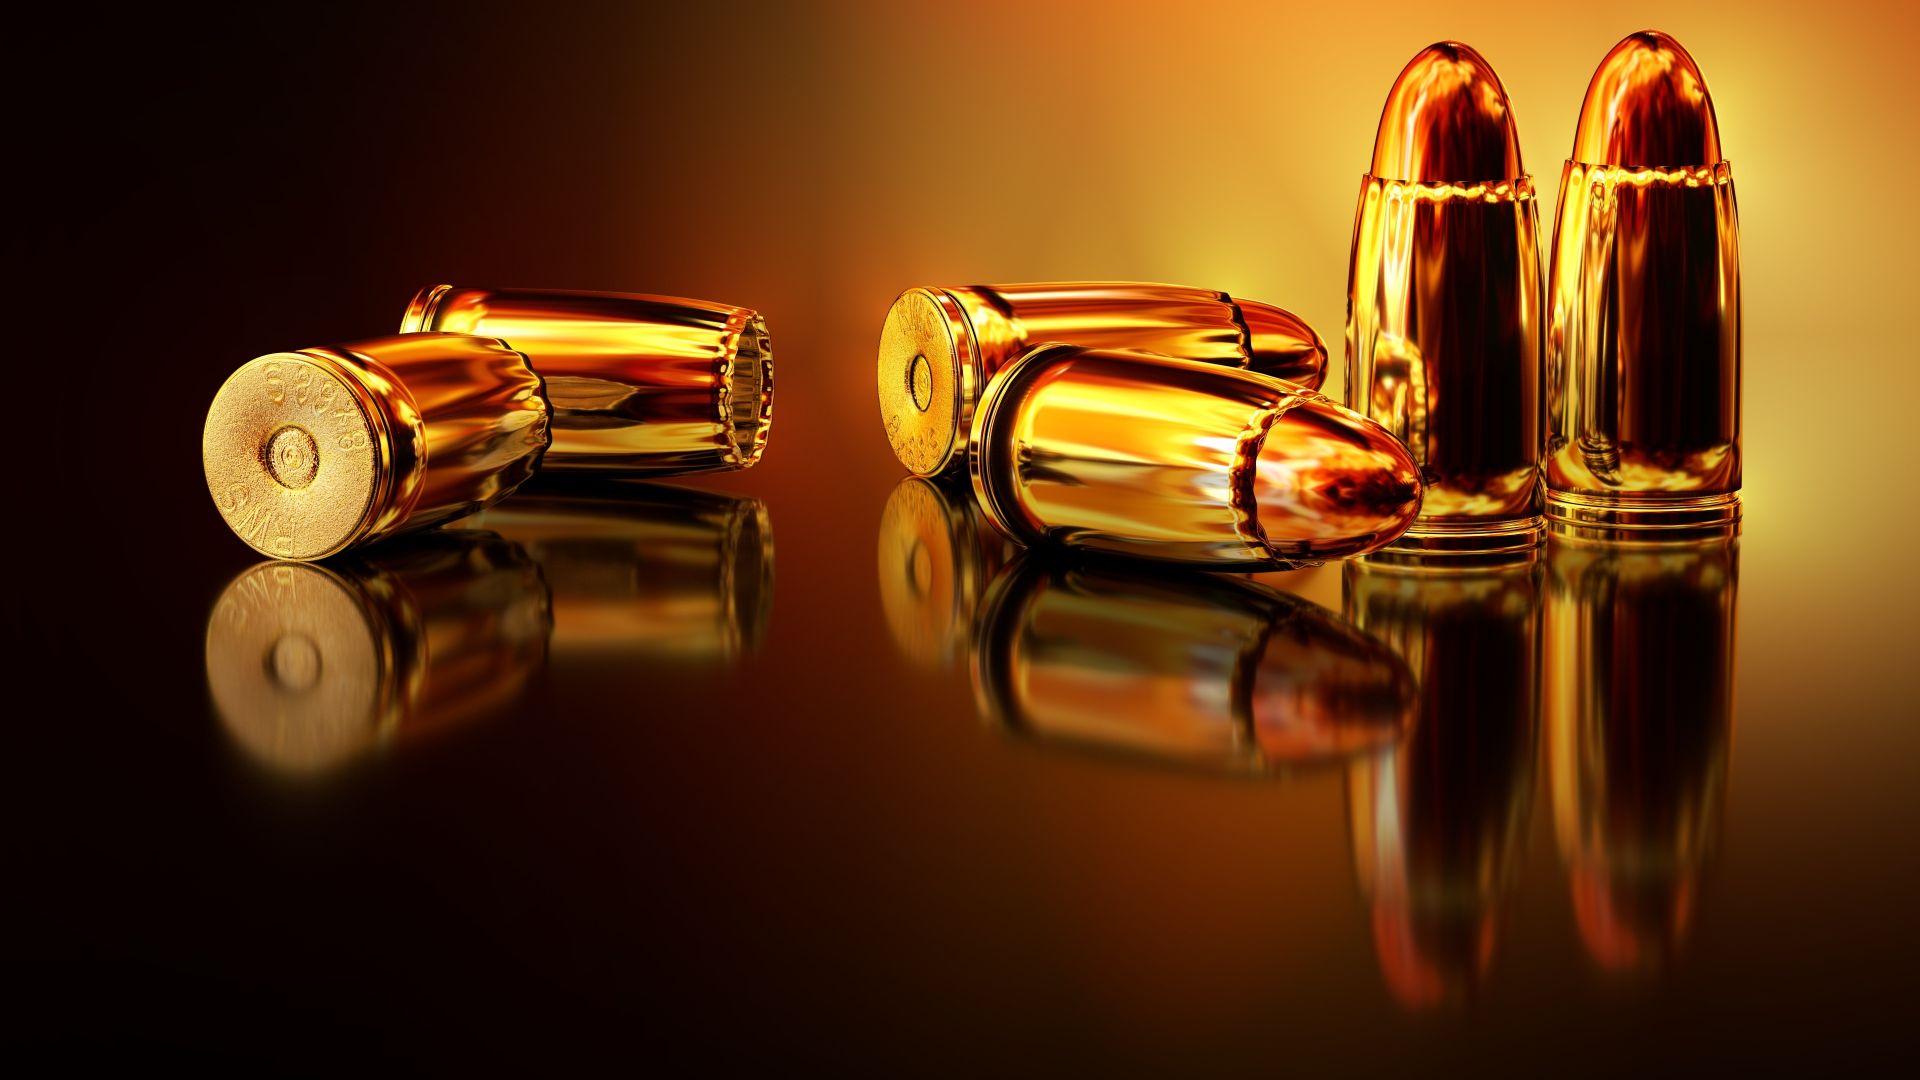 Wallpaper Cartridges, ammunition, weapons, bullets, reflections